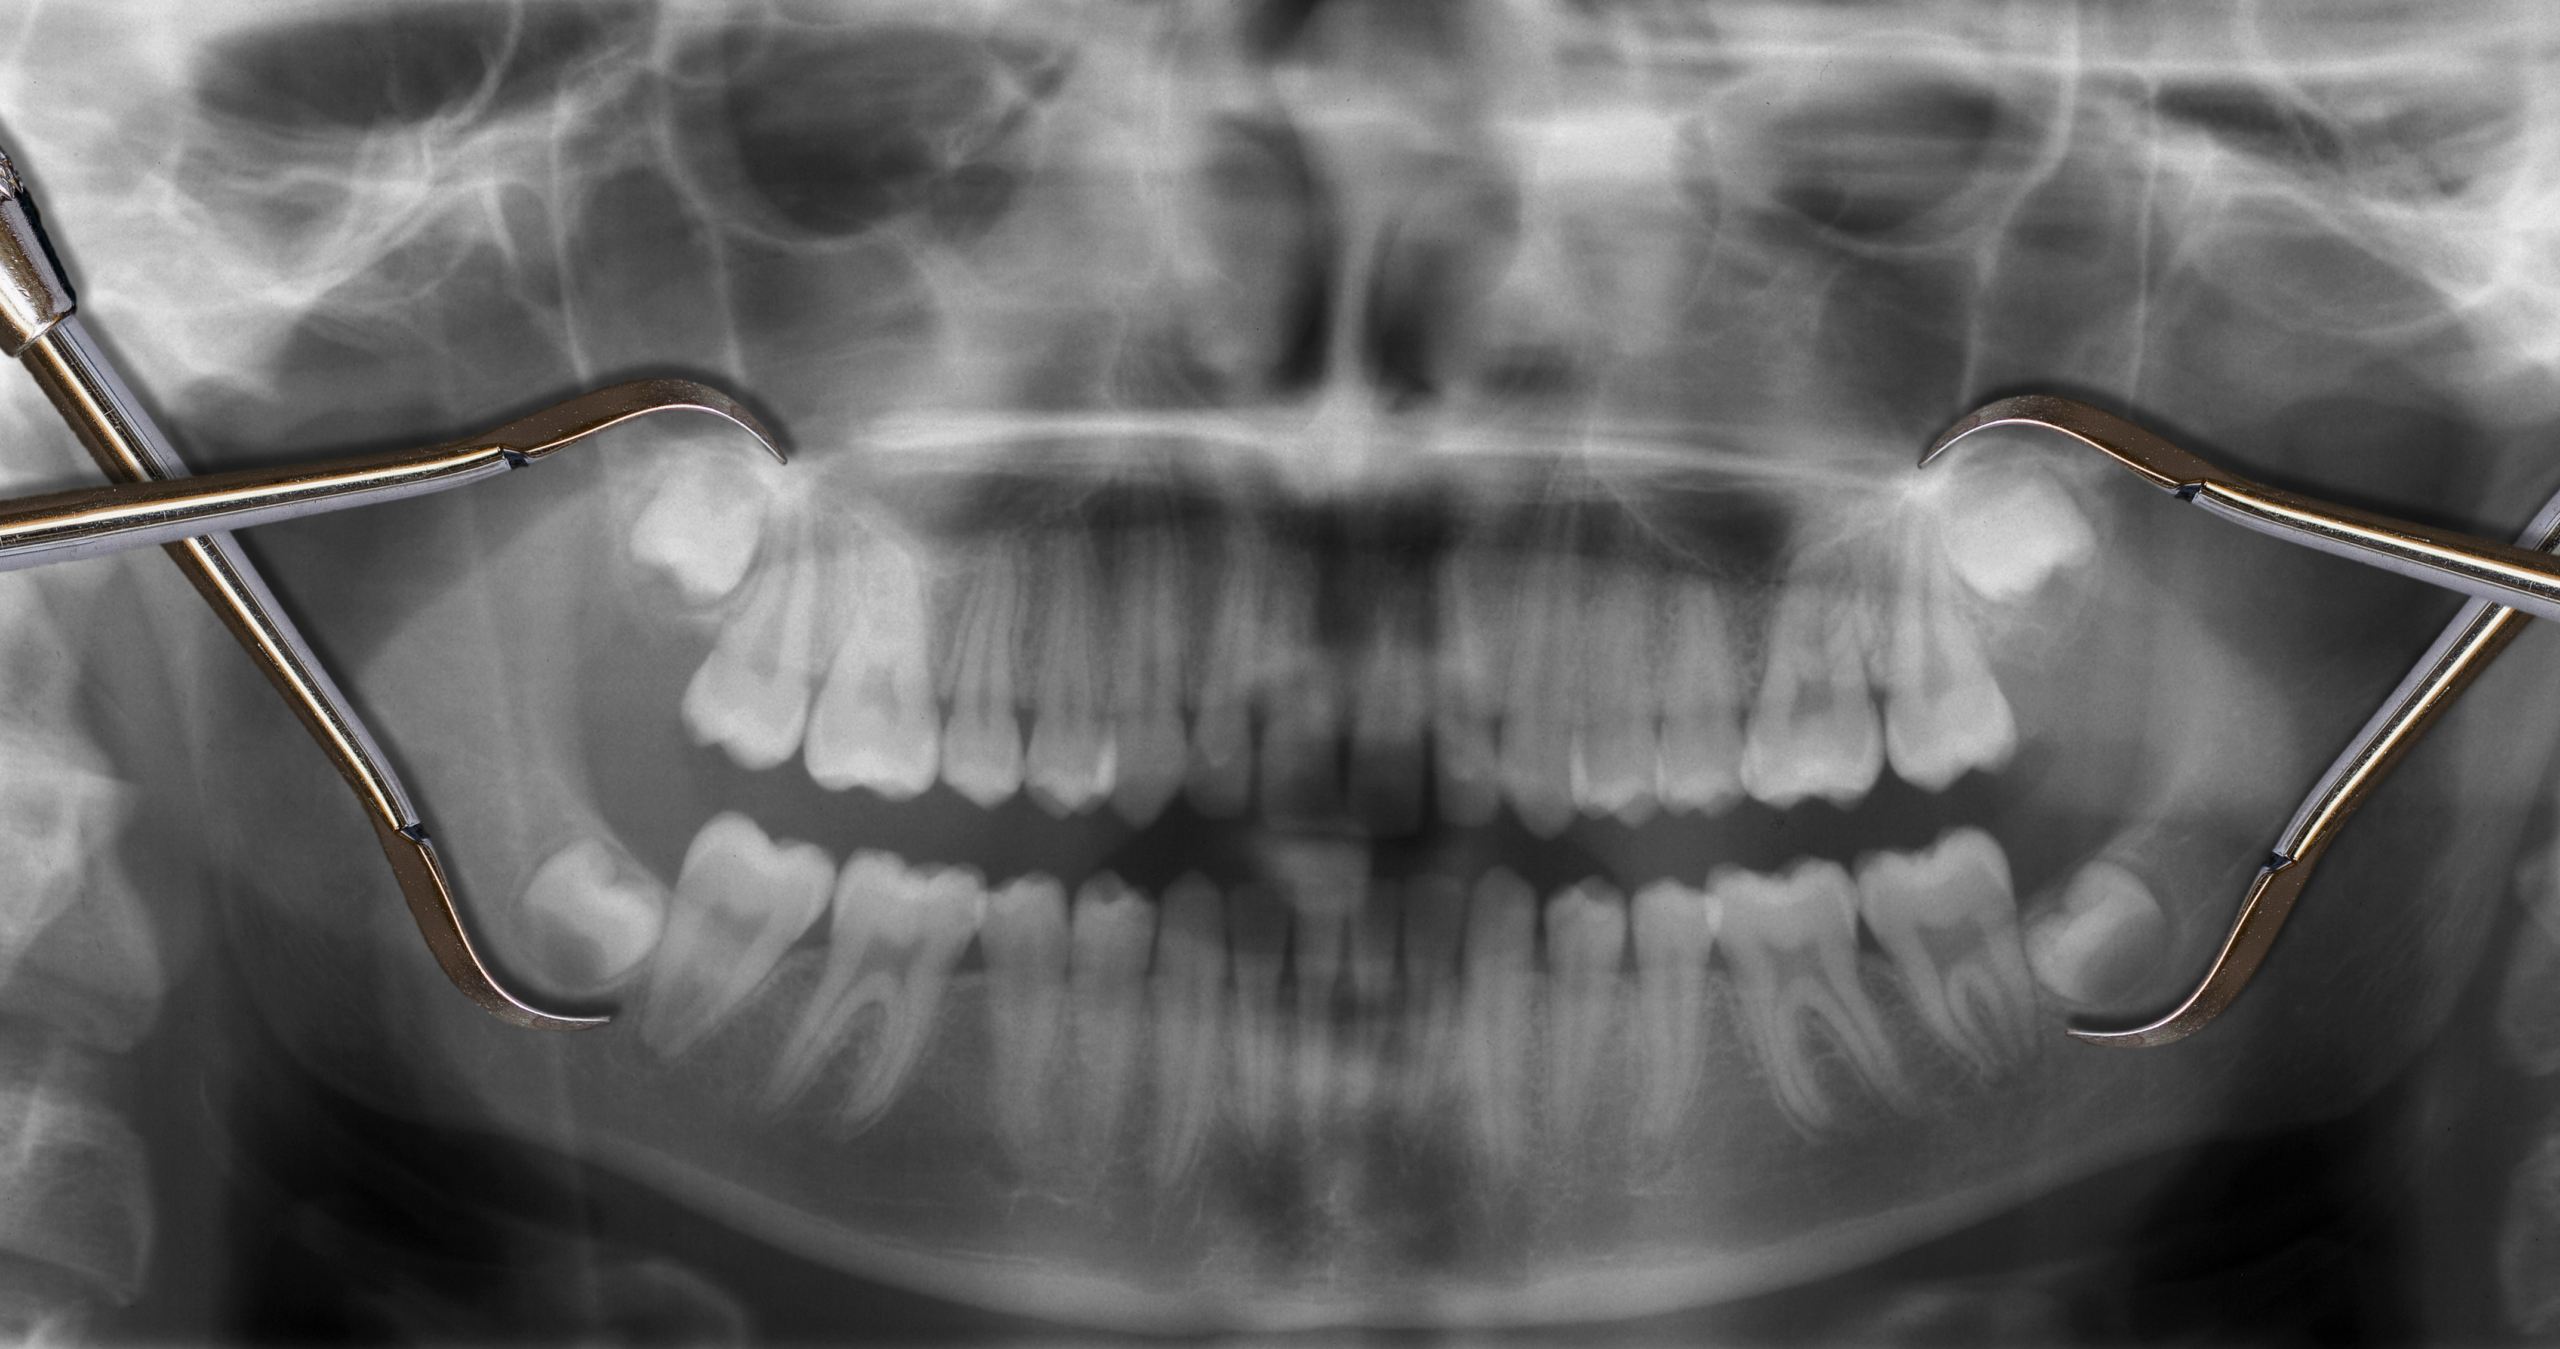 Are dental x-rays safe for children